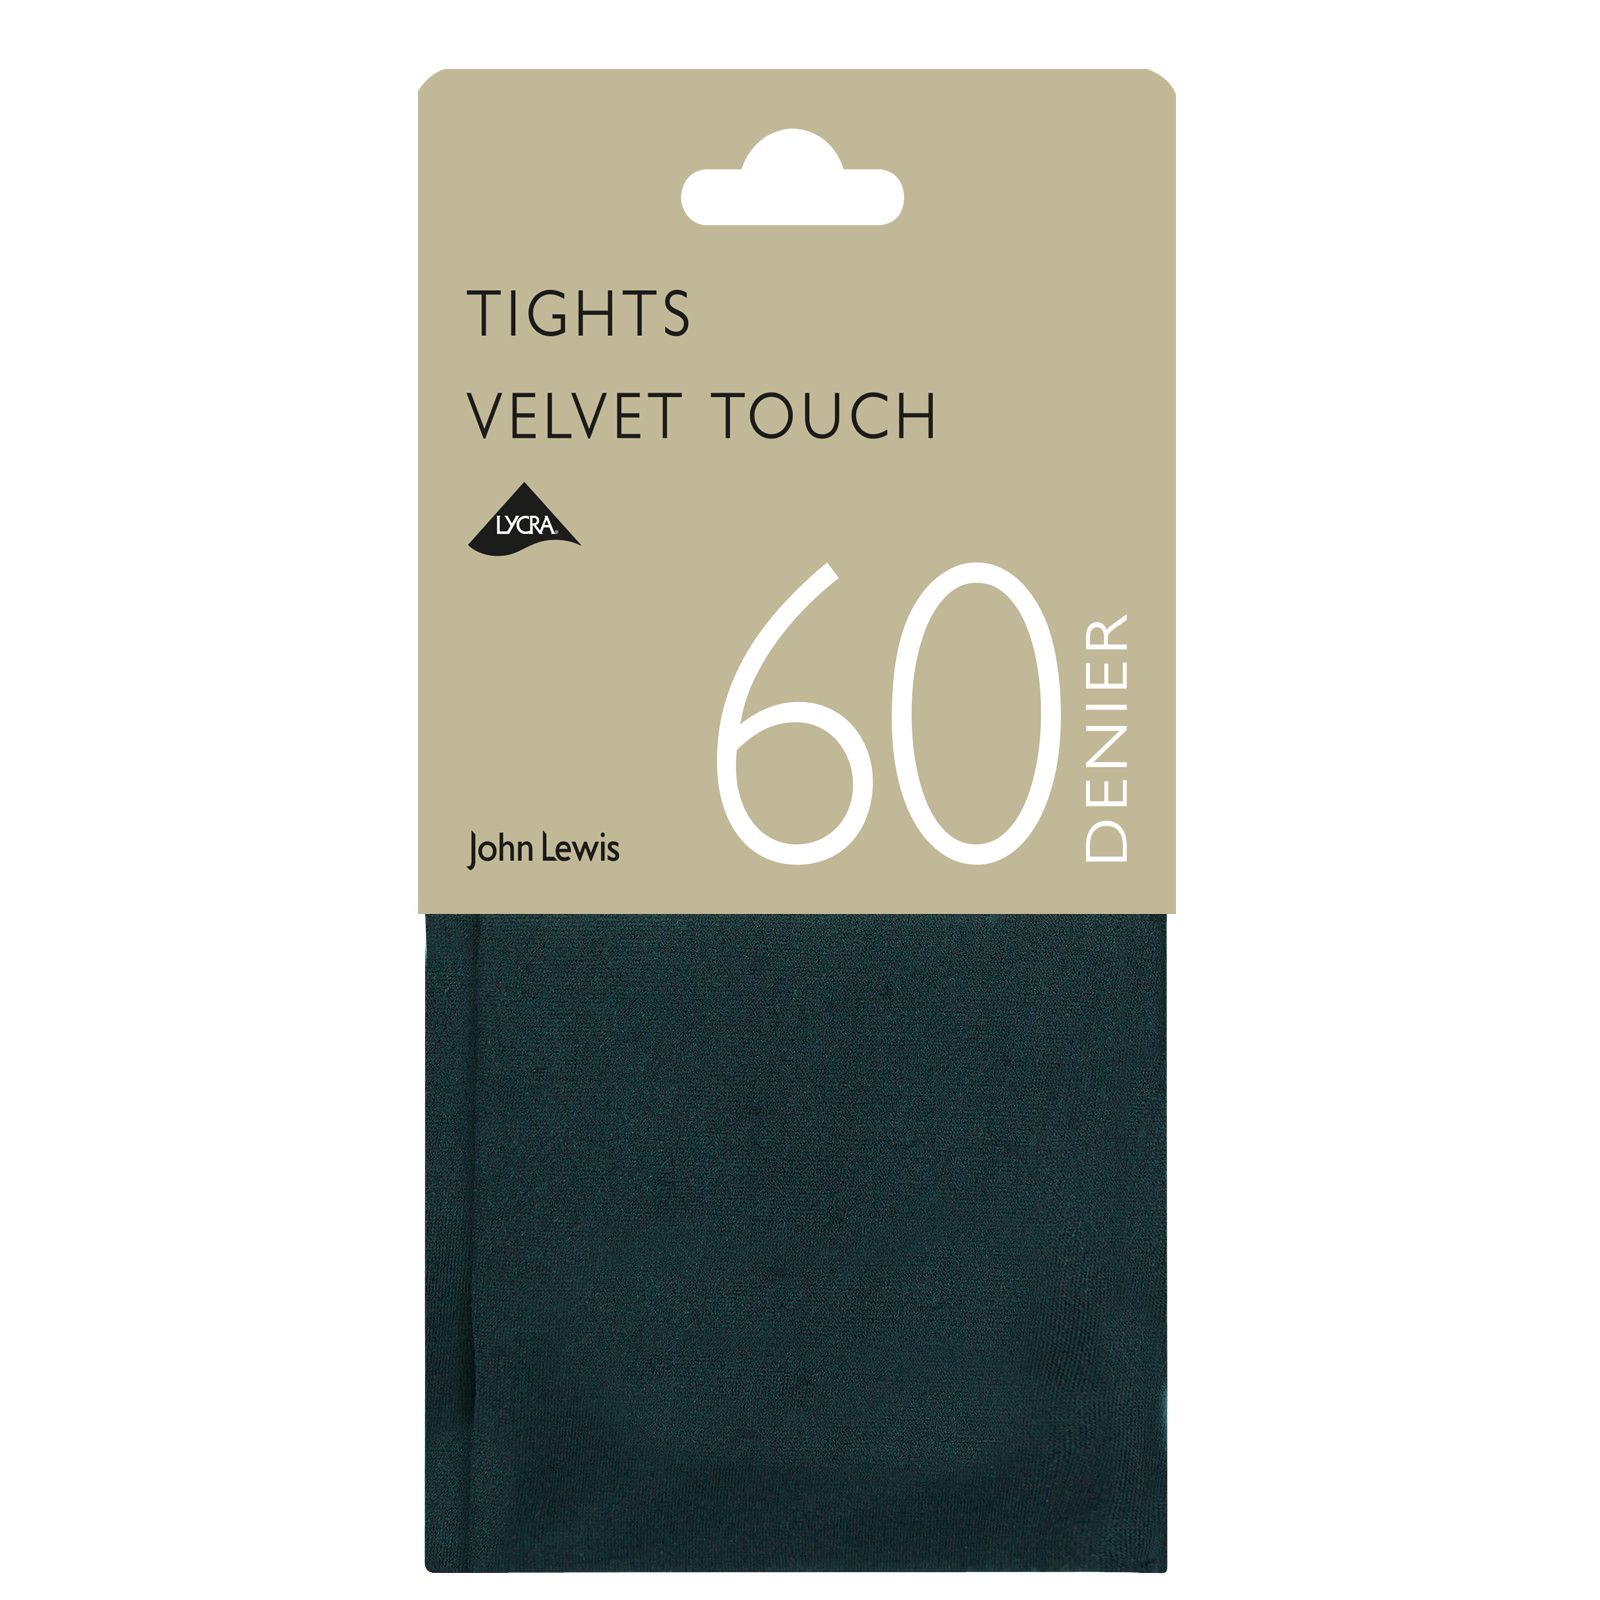 John Lewis & Partners 60 Denier Velvet Touch Opaque Tights, Green, S